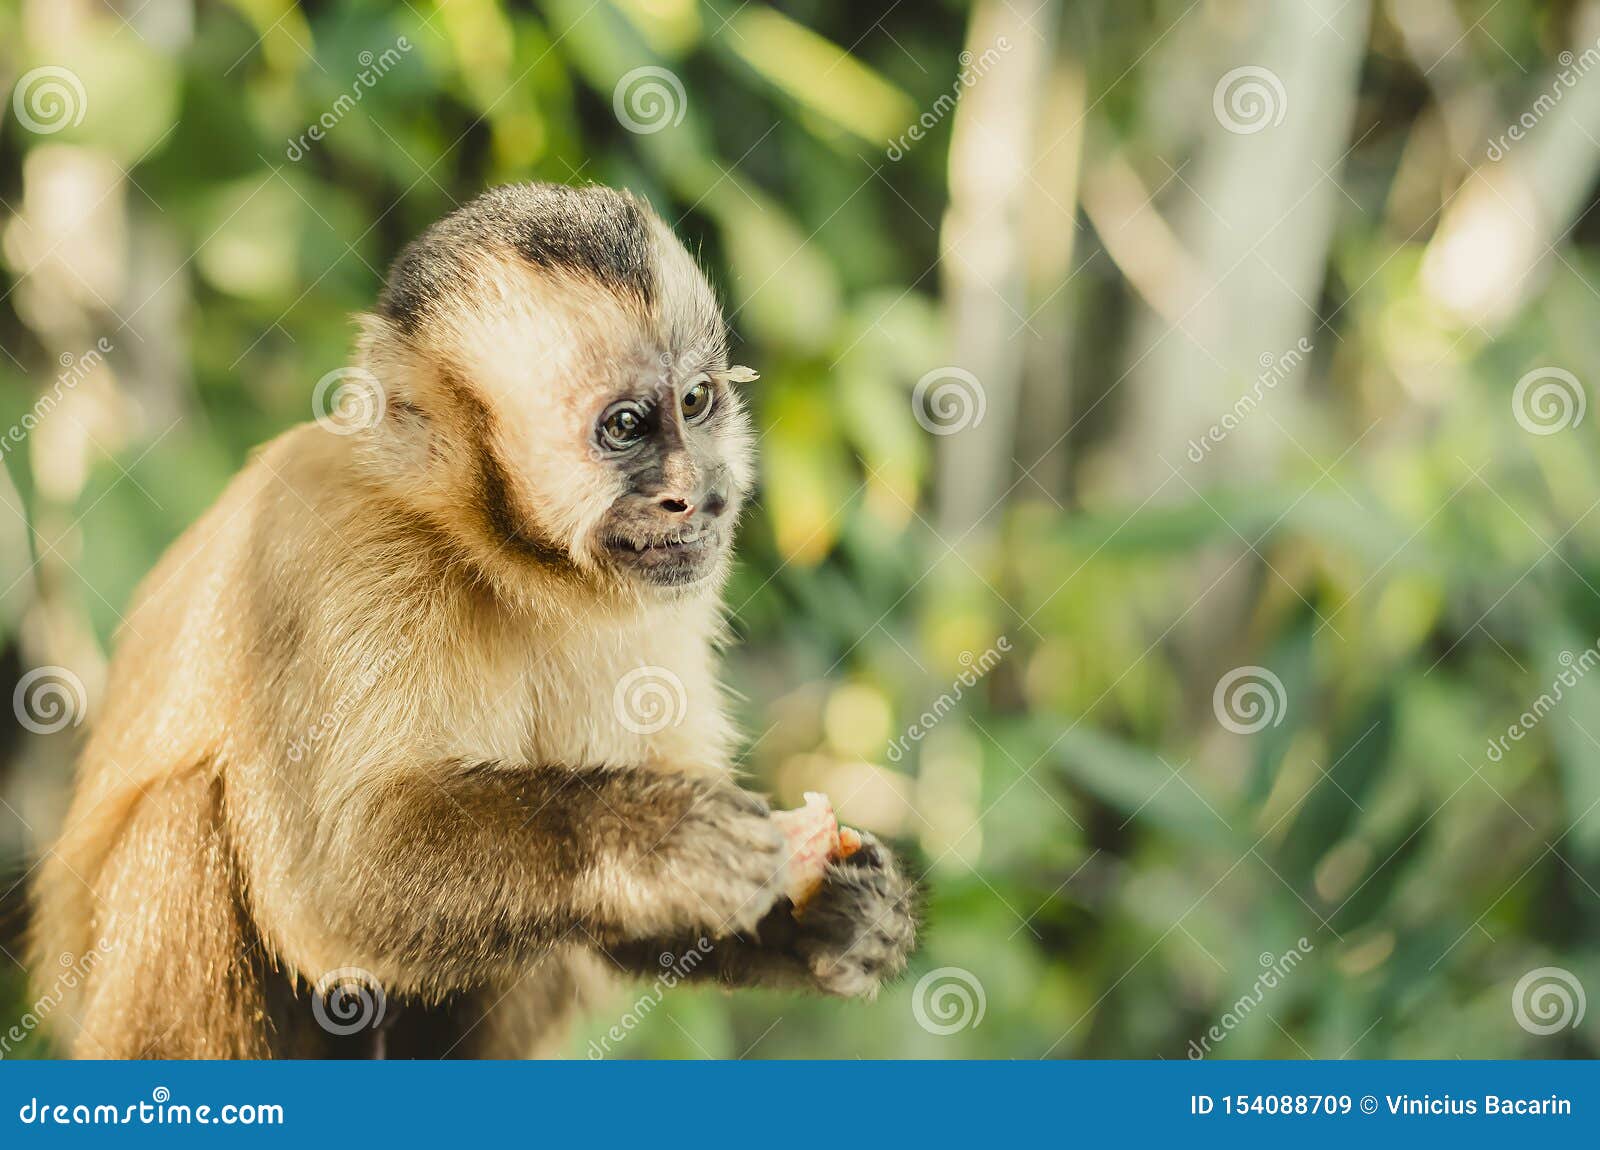 brazilian monkey, macaco prego